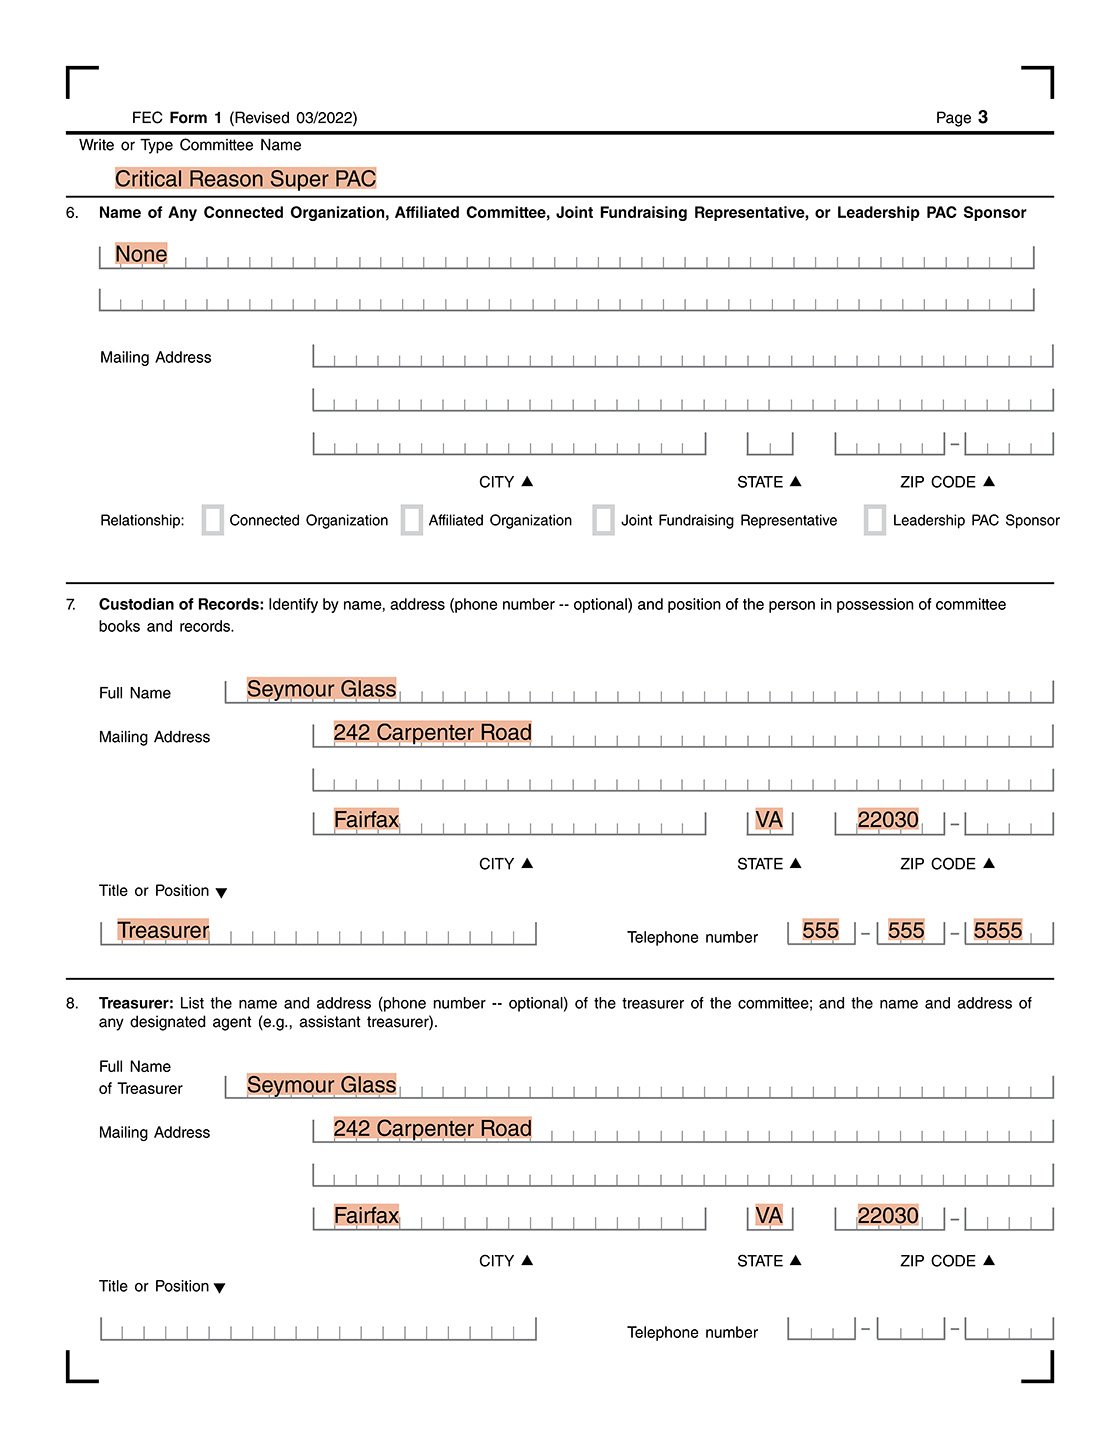 Super PAC Registration_Form 1_Page 3_fe311